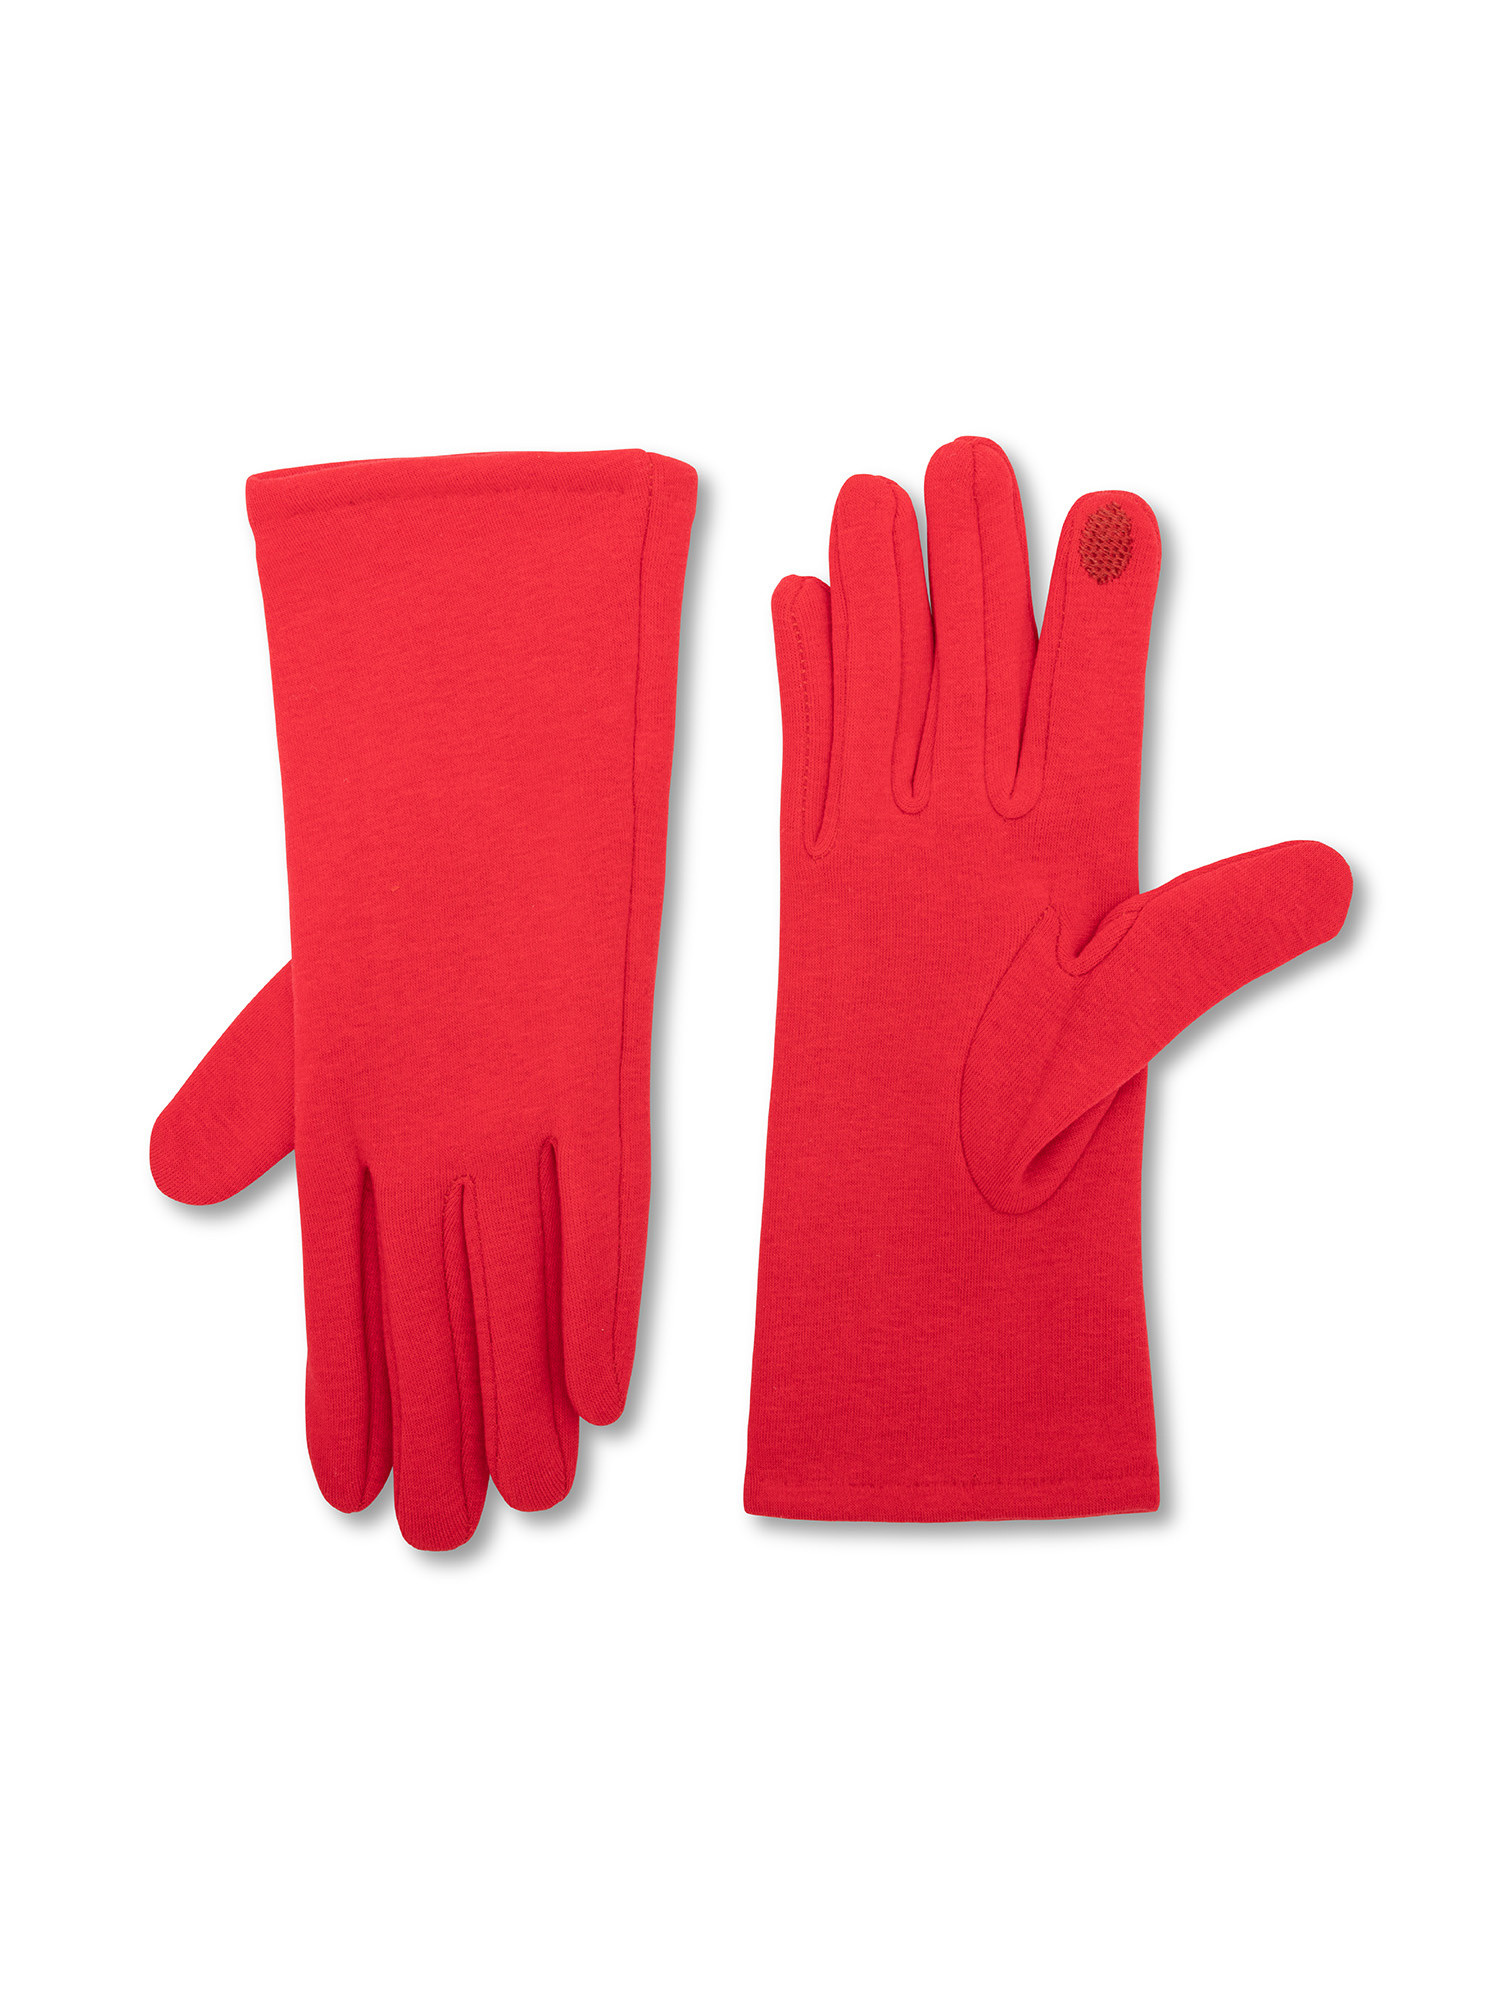 Koan - Jersey gloves, Red, large image number 0